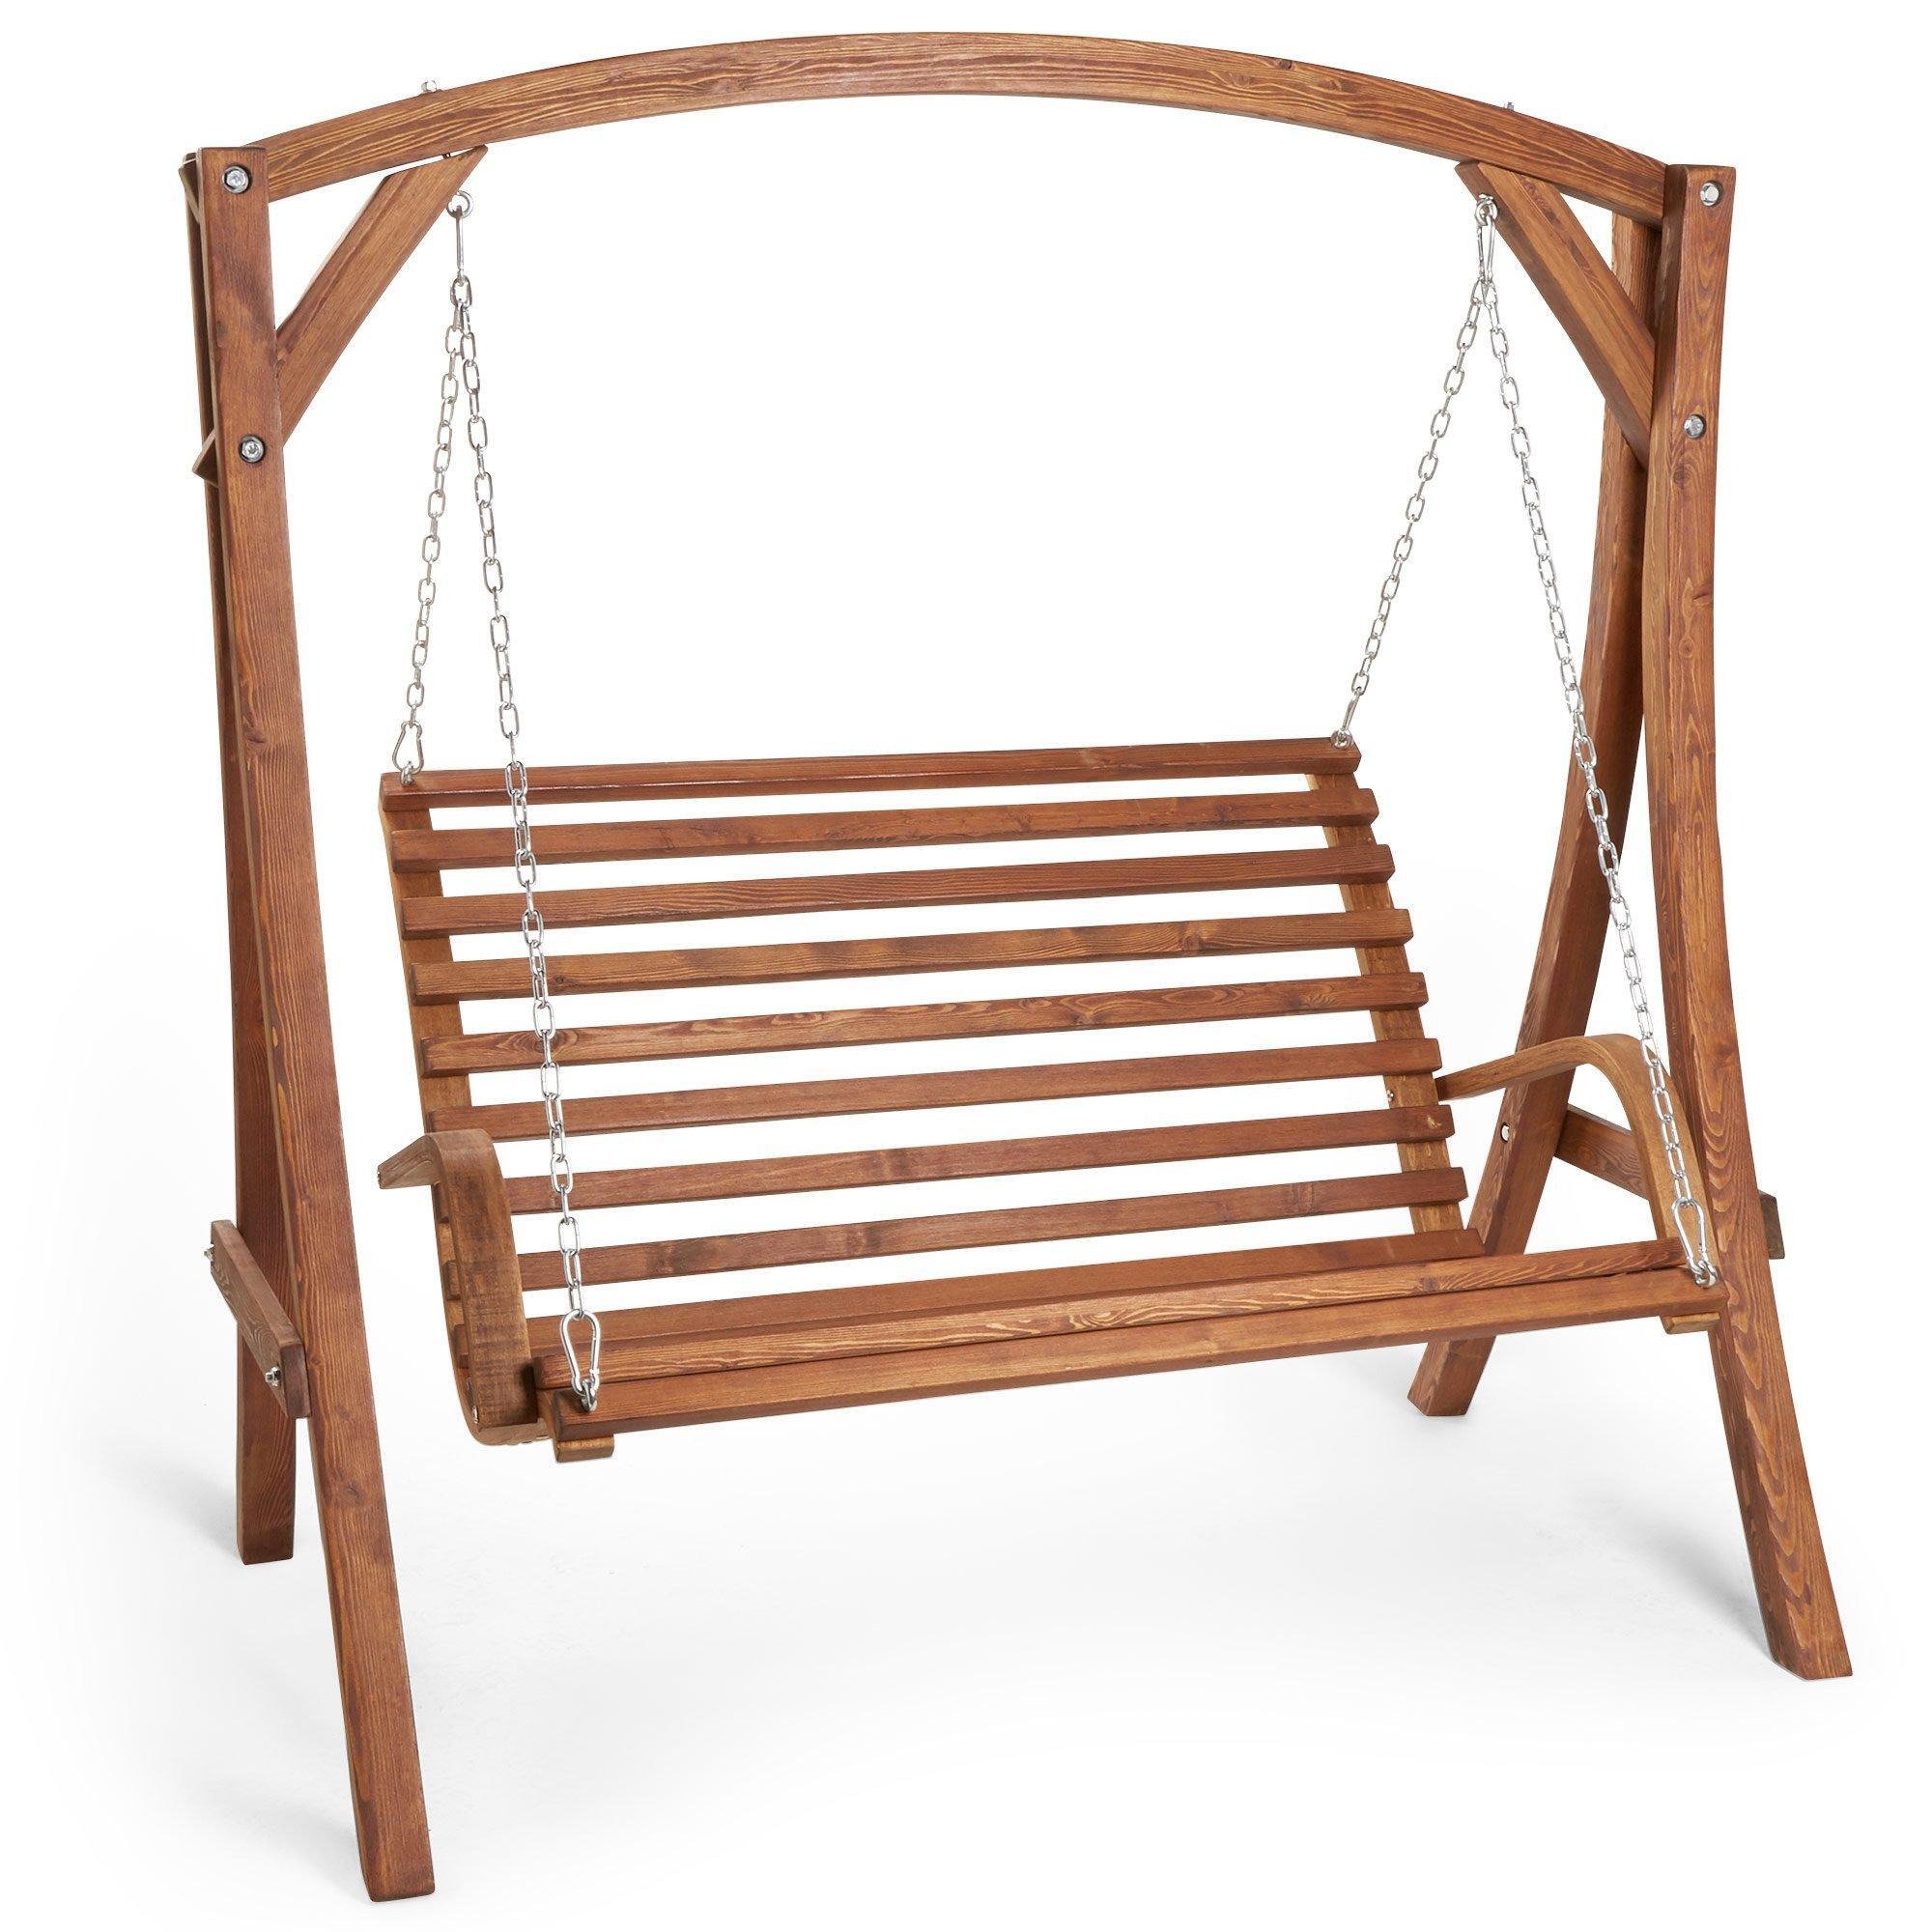 2 Person Slatted Design Wooden Garden Swing Seat - image 1